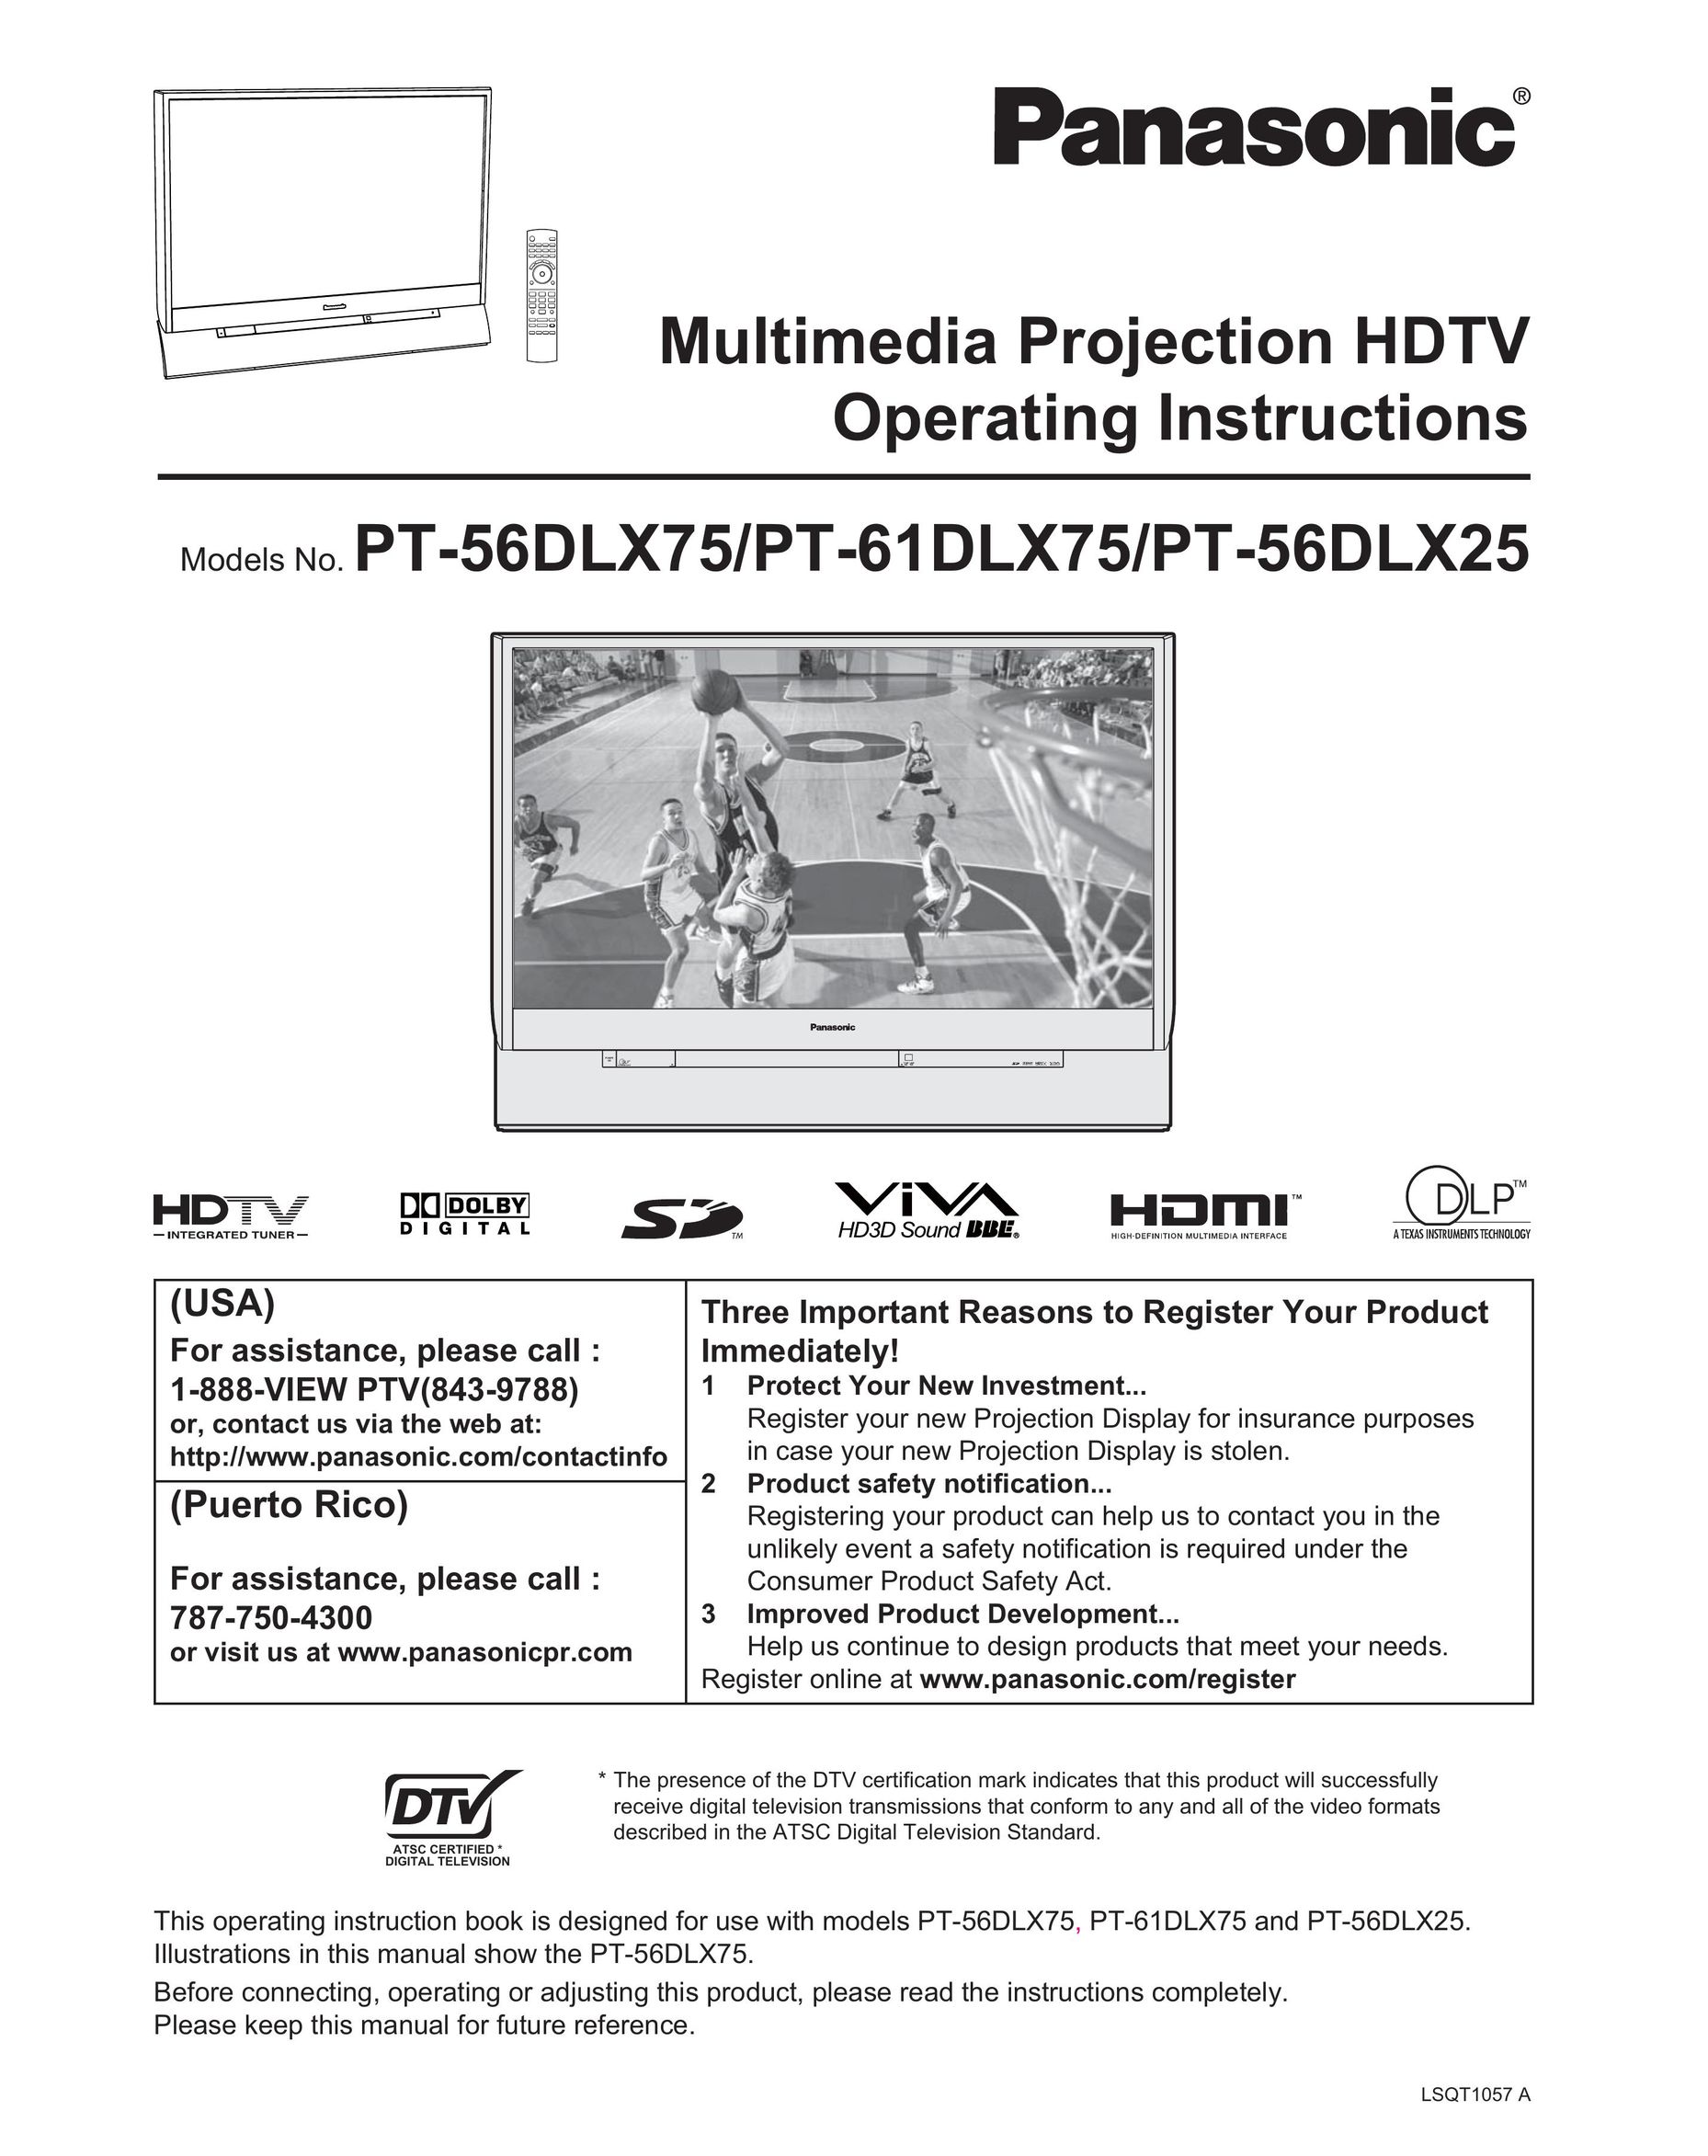 Panasonic PT 56DLX25 Projection Television User Manual